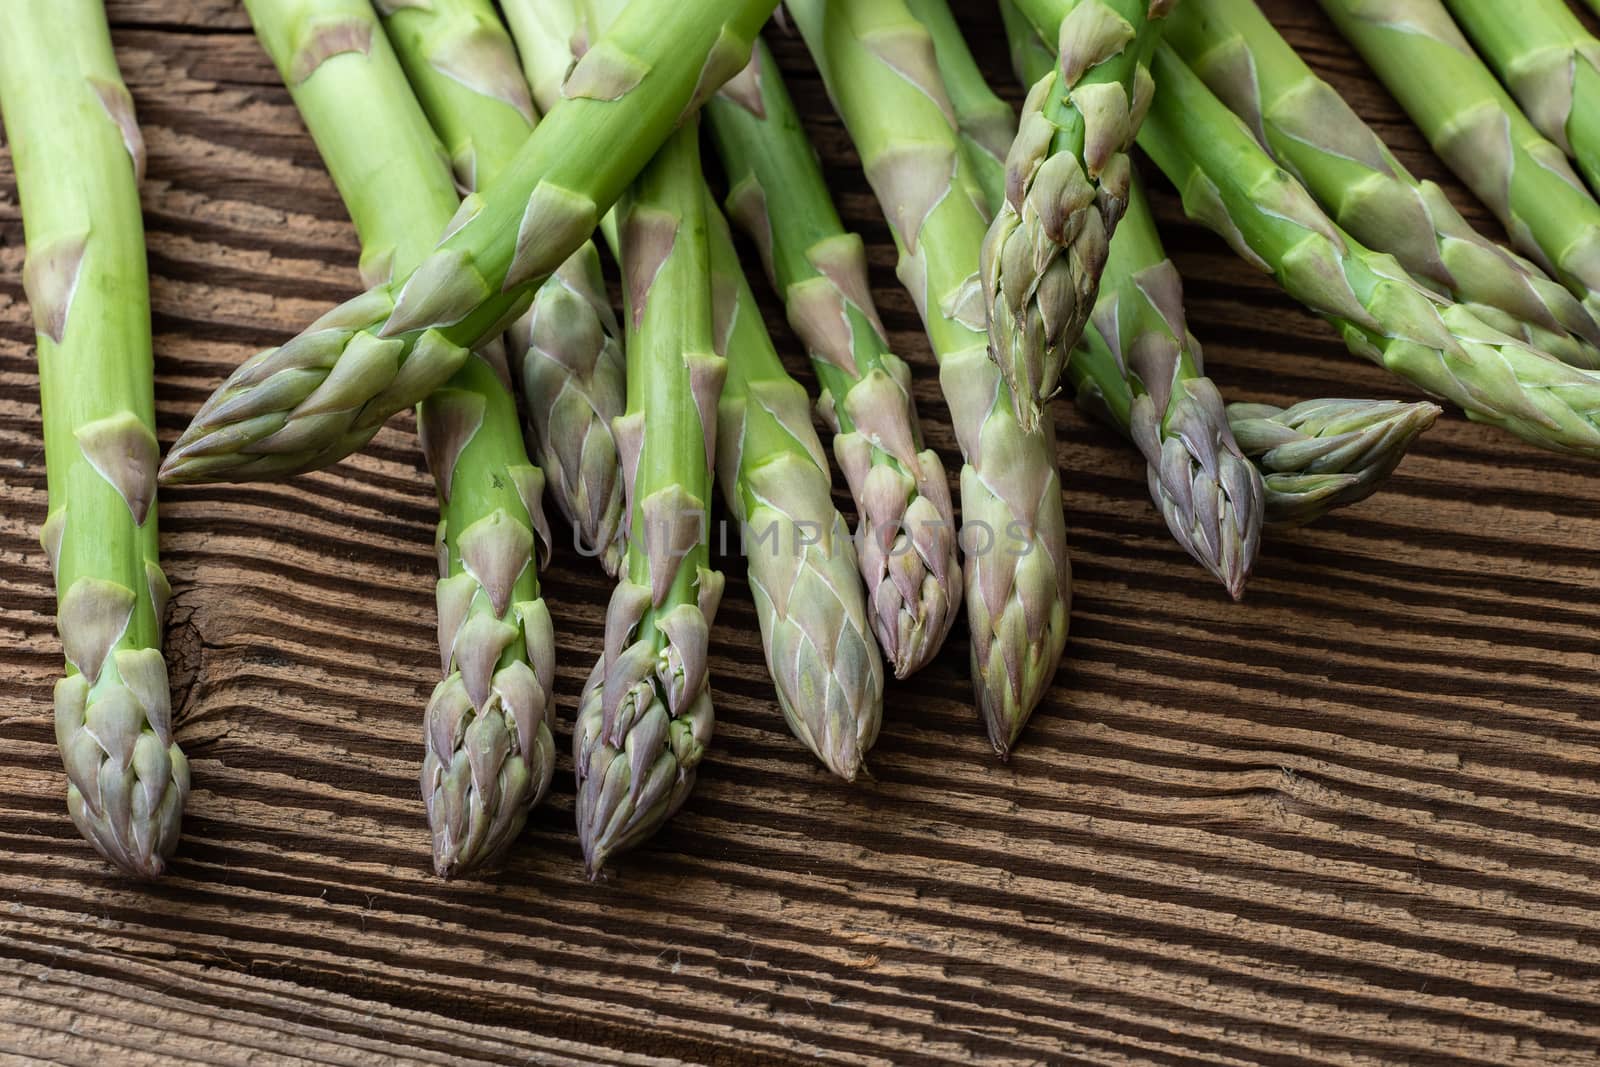 Raw garden asparagus stems. Fresh green spring vegetables on wooden background. (Asparagus officinalis).